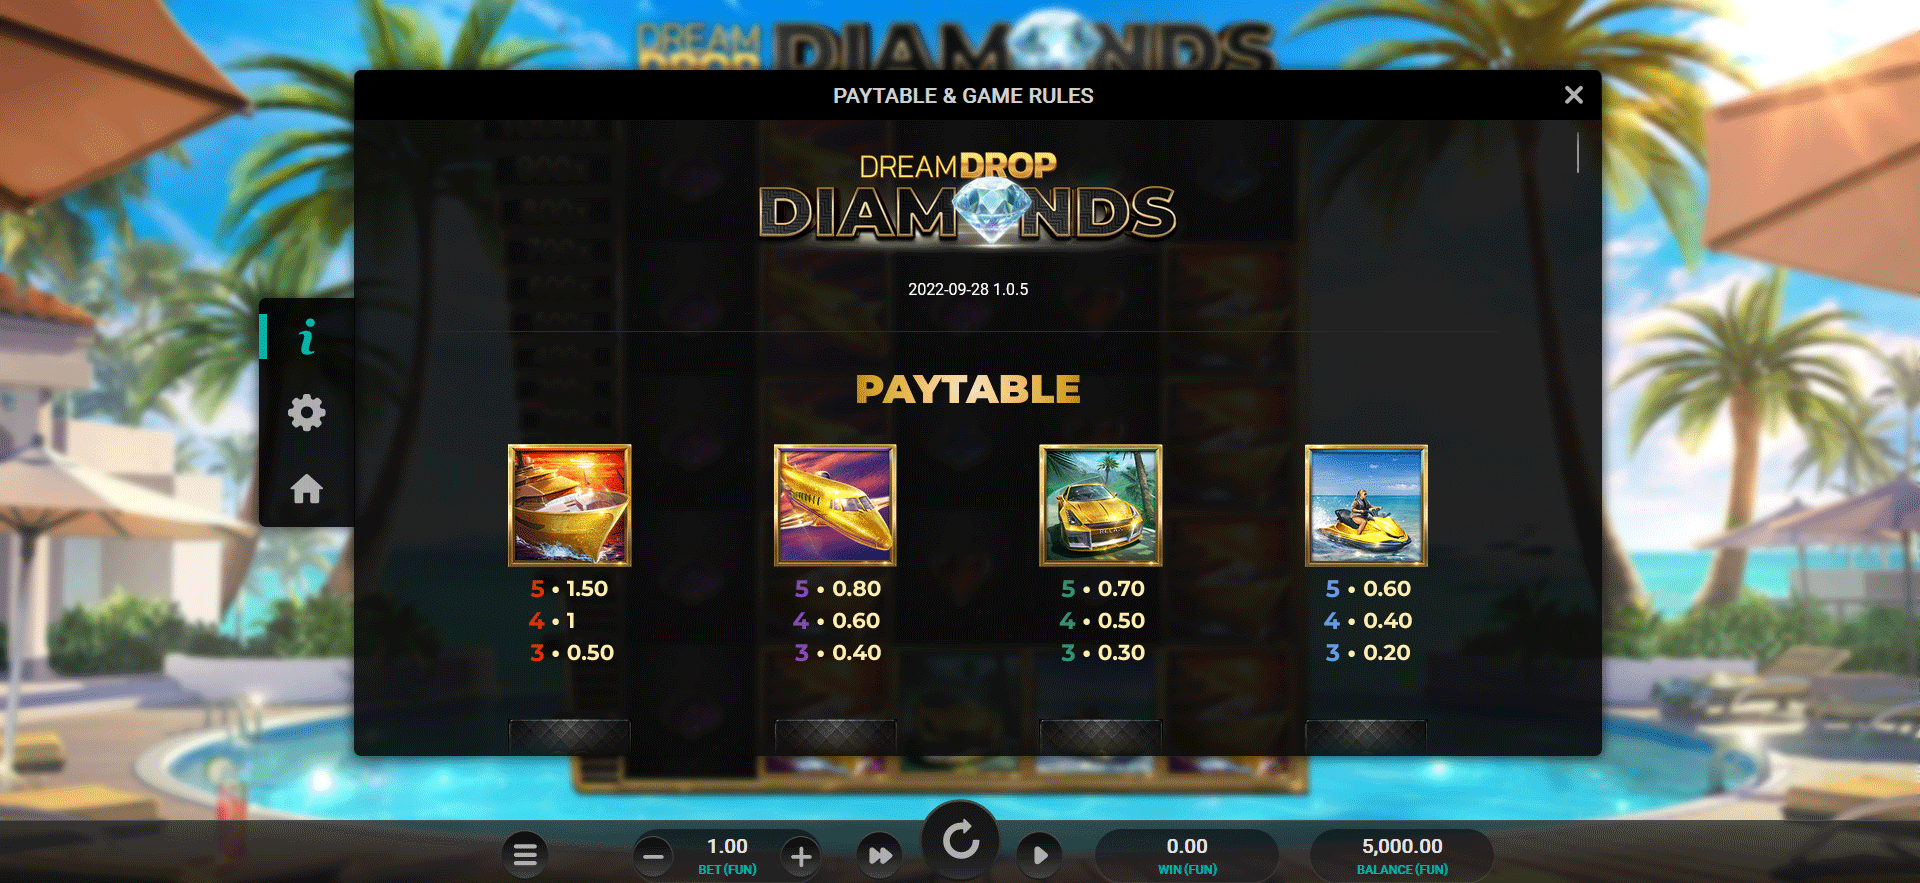 paytable slot machine dream drop diamonds